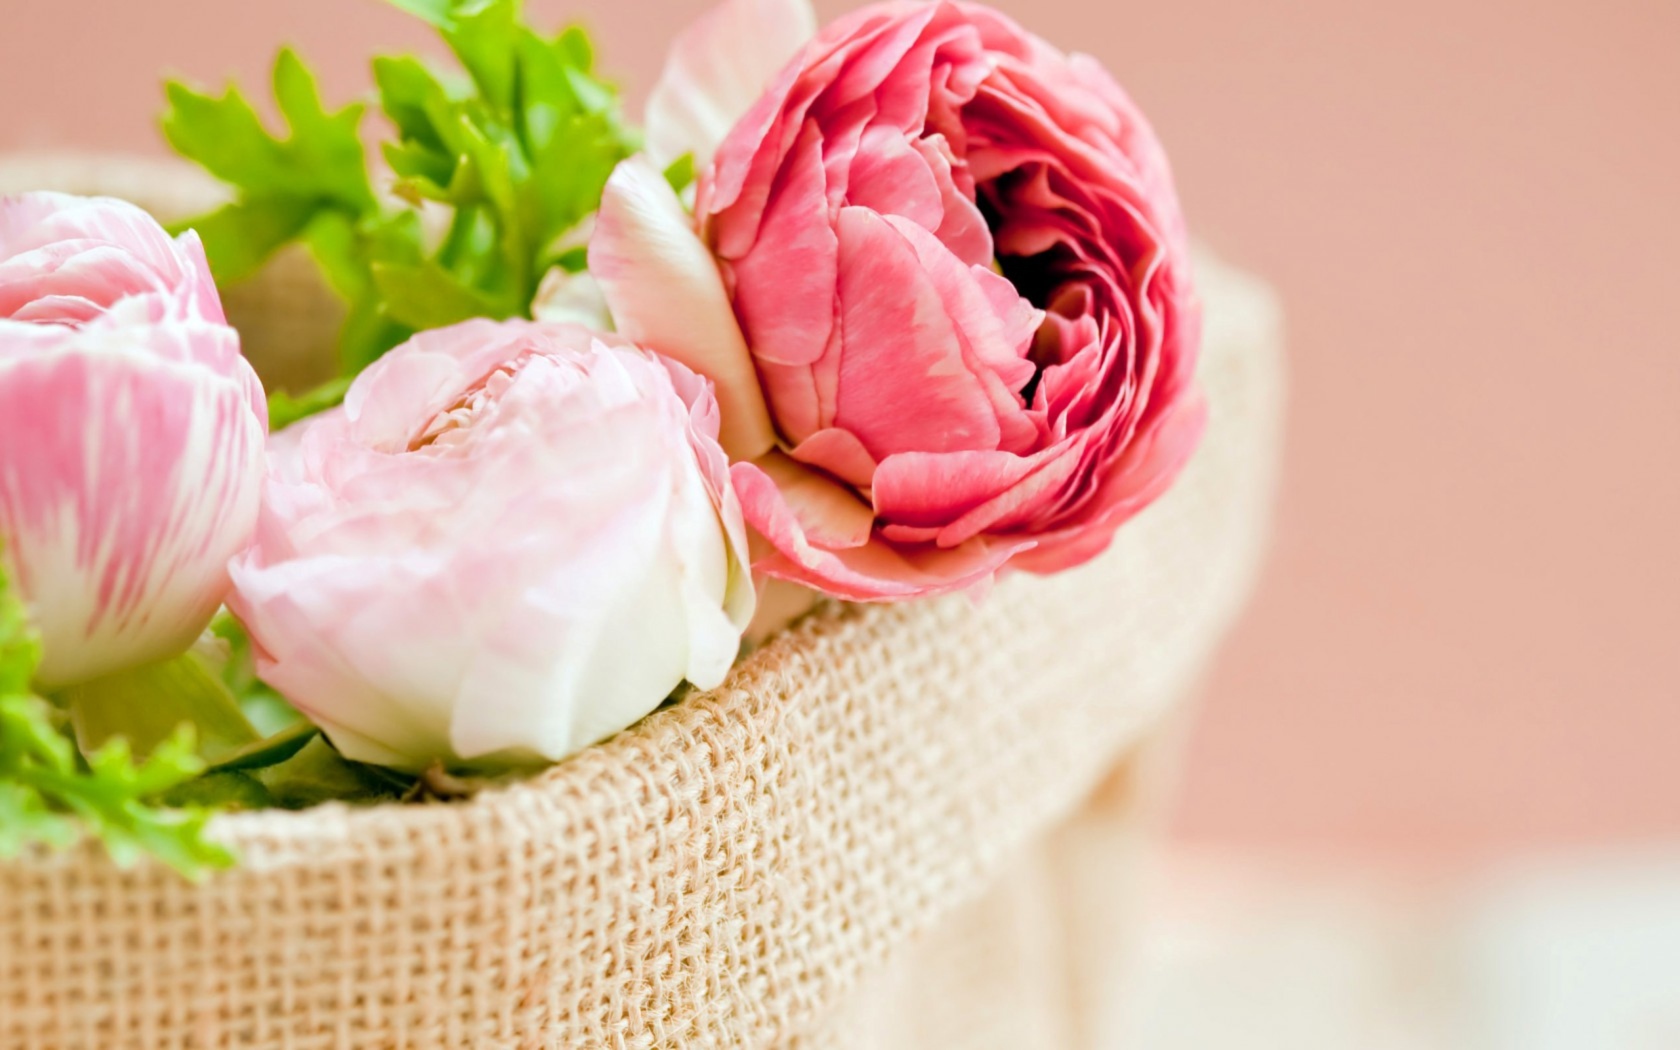 Розовые цветы лютика в корзине на розовом фоне